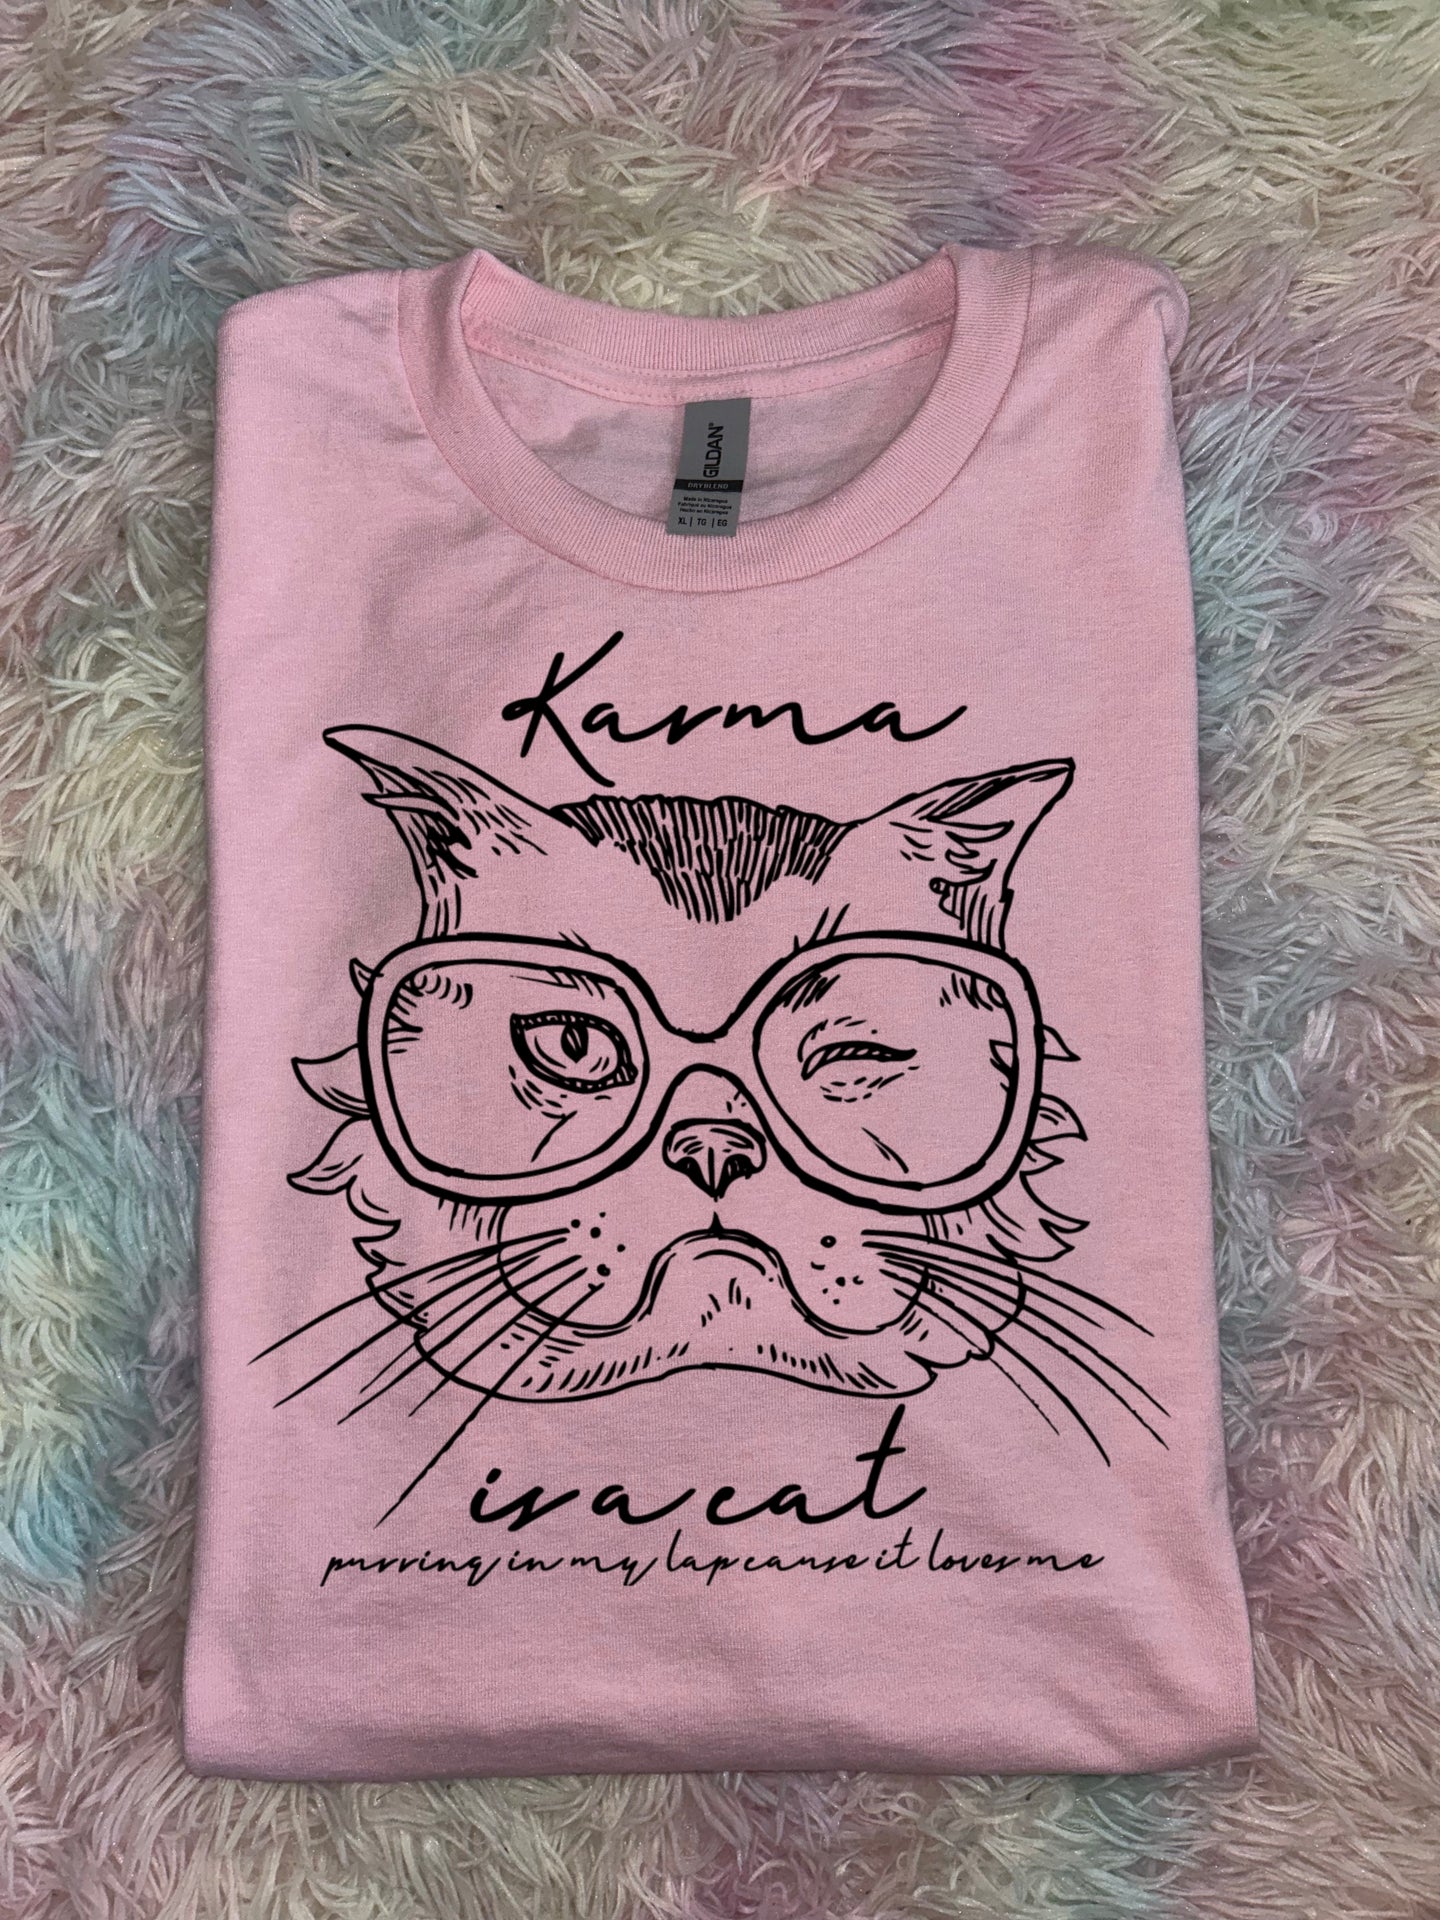 Karma Cat PREORDER